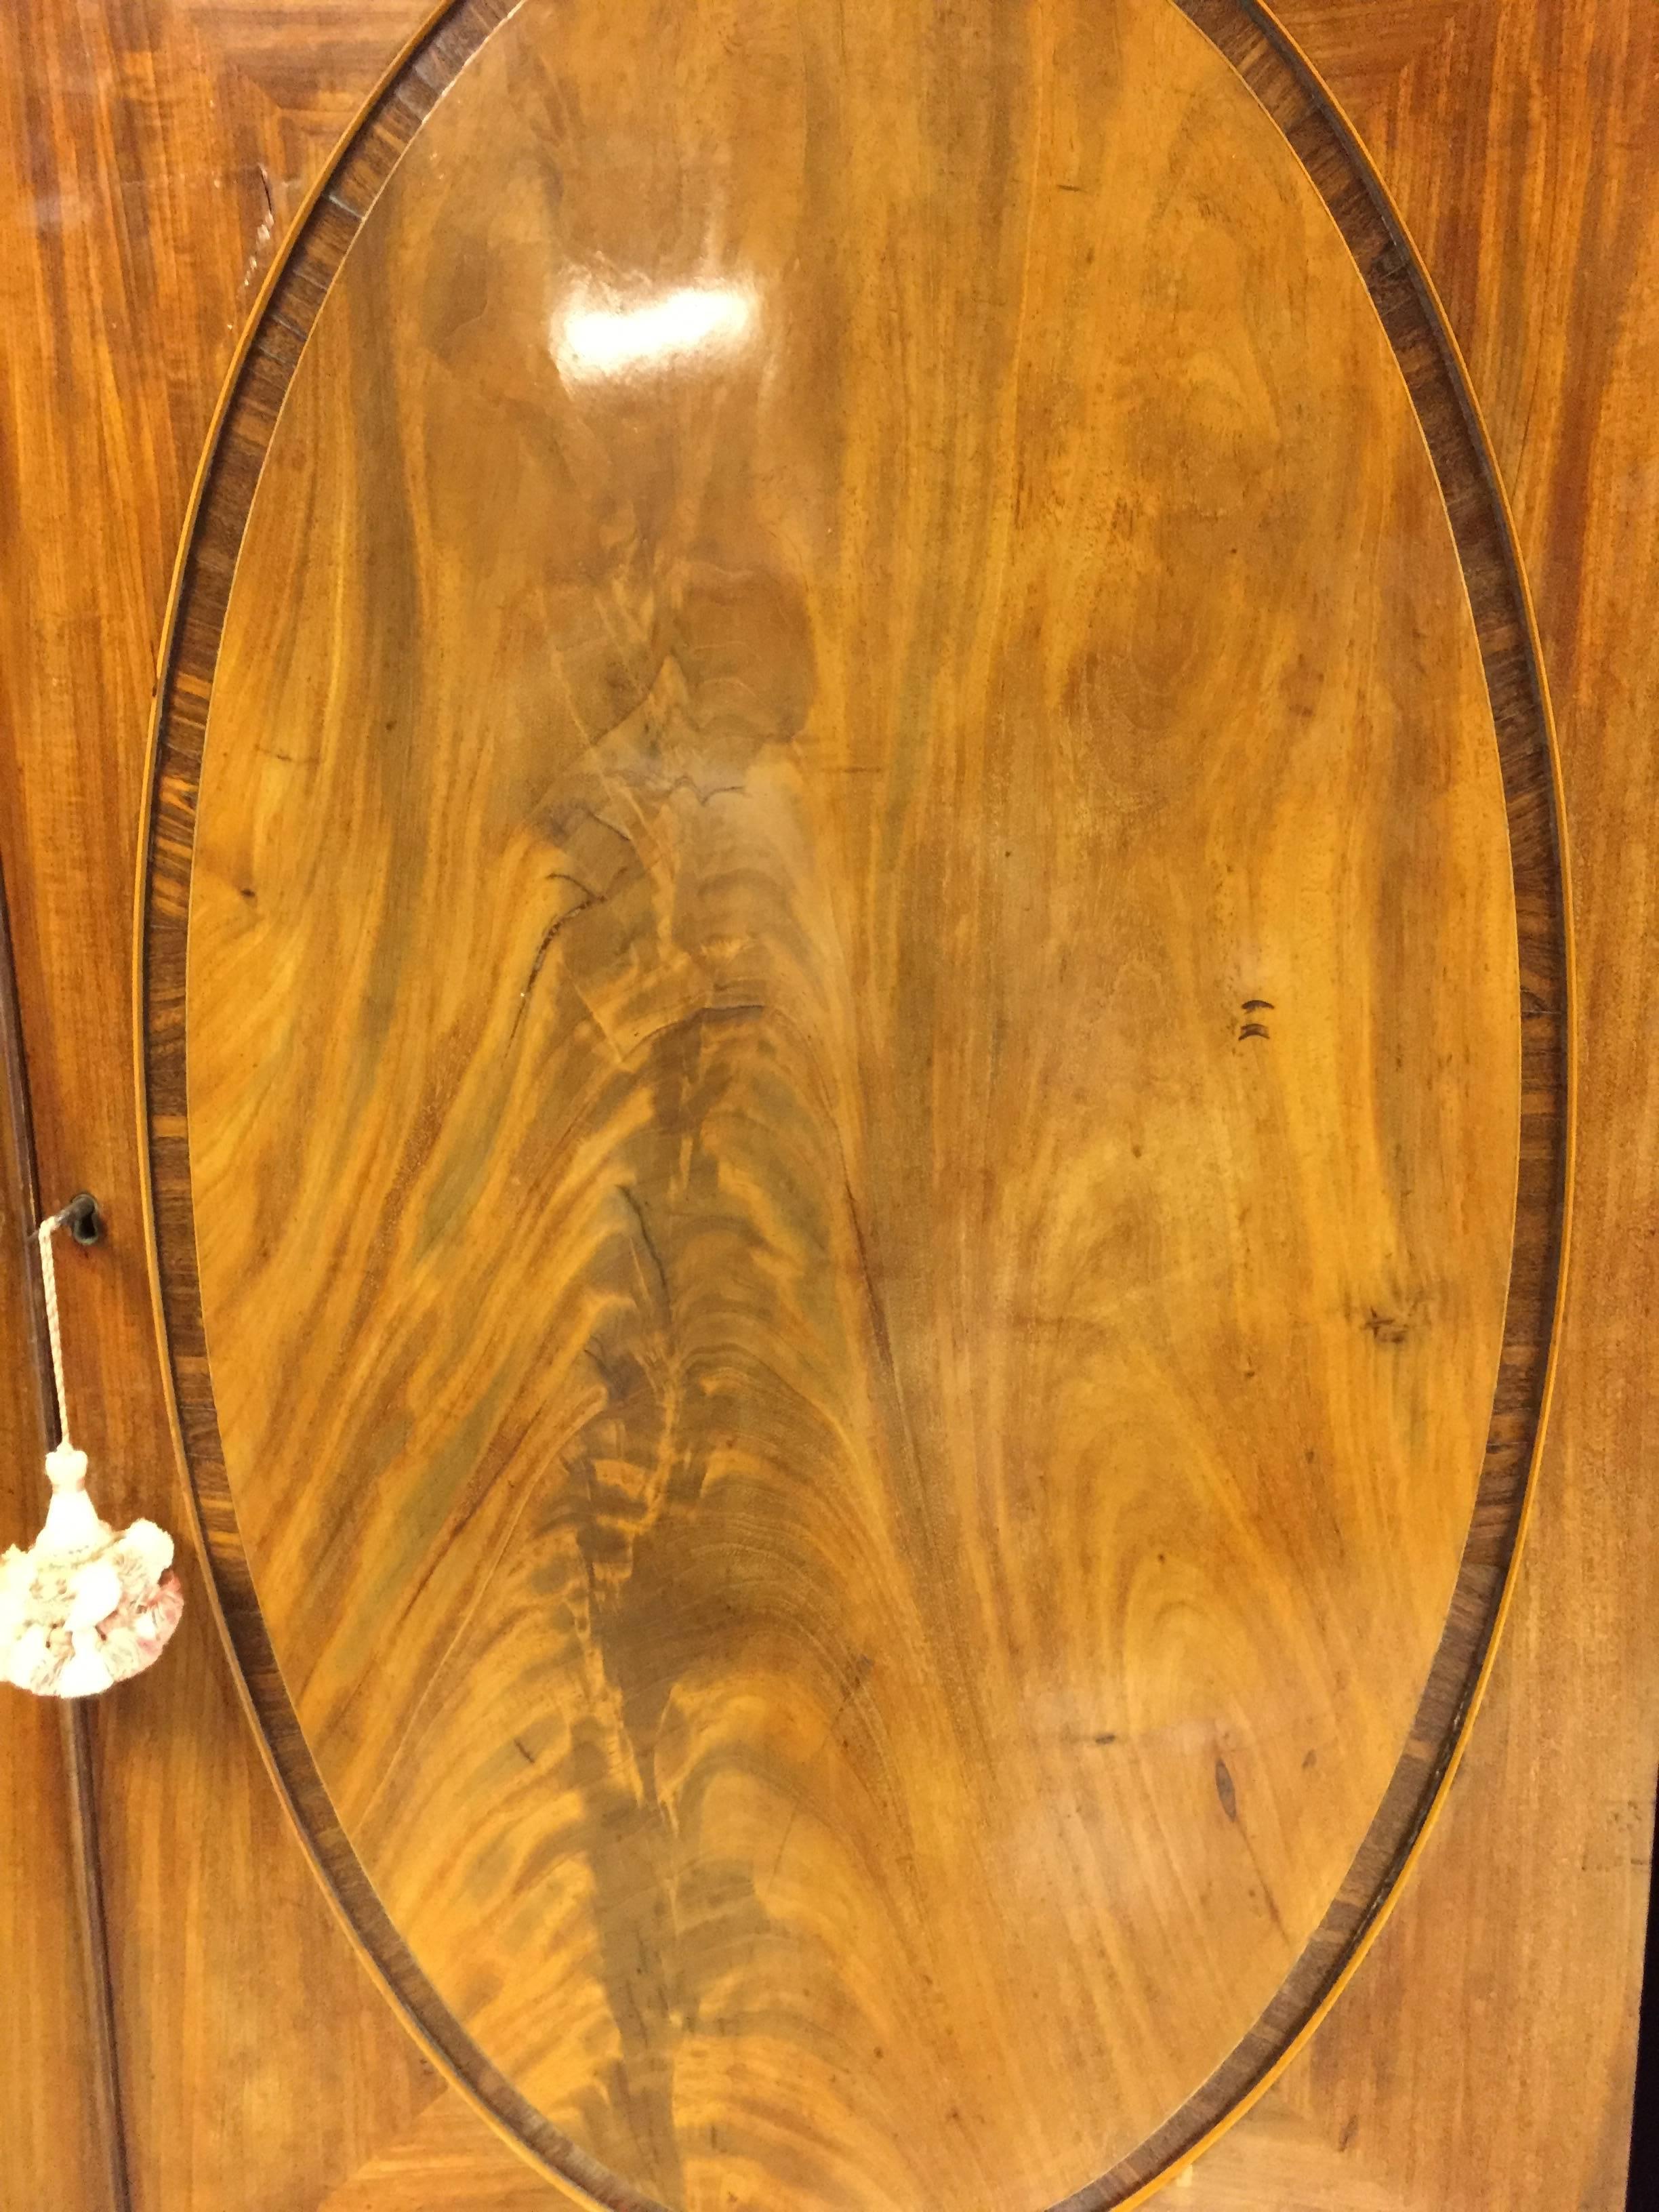 English Georgian mahogany linen press with oval panel doors banded with rosewood. C. 1820. Unusual golden walnut color, dentil mold cornice, original bracket feet, Chippendale handle pulls on rosettes, oak interiors, three original slides.